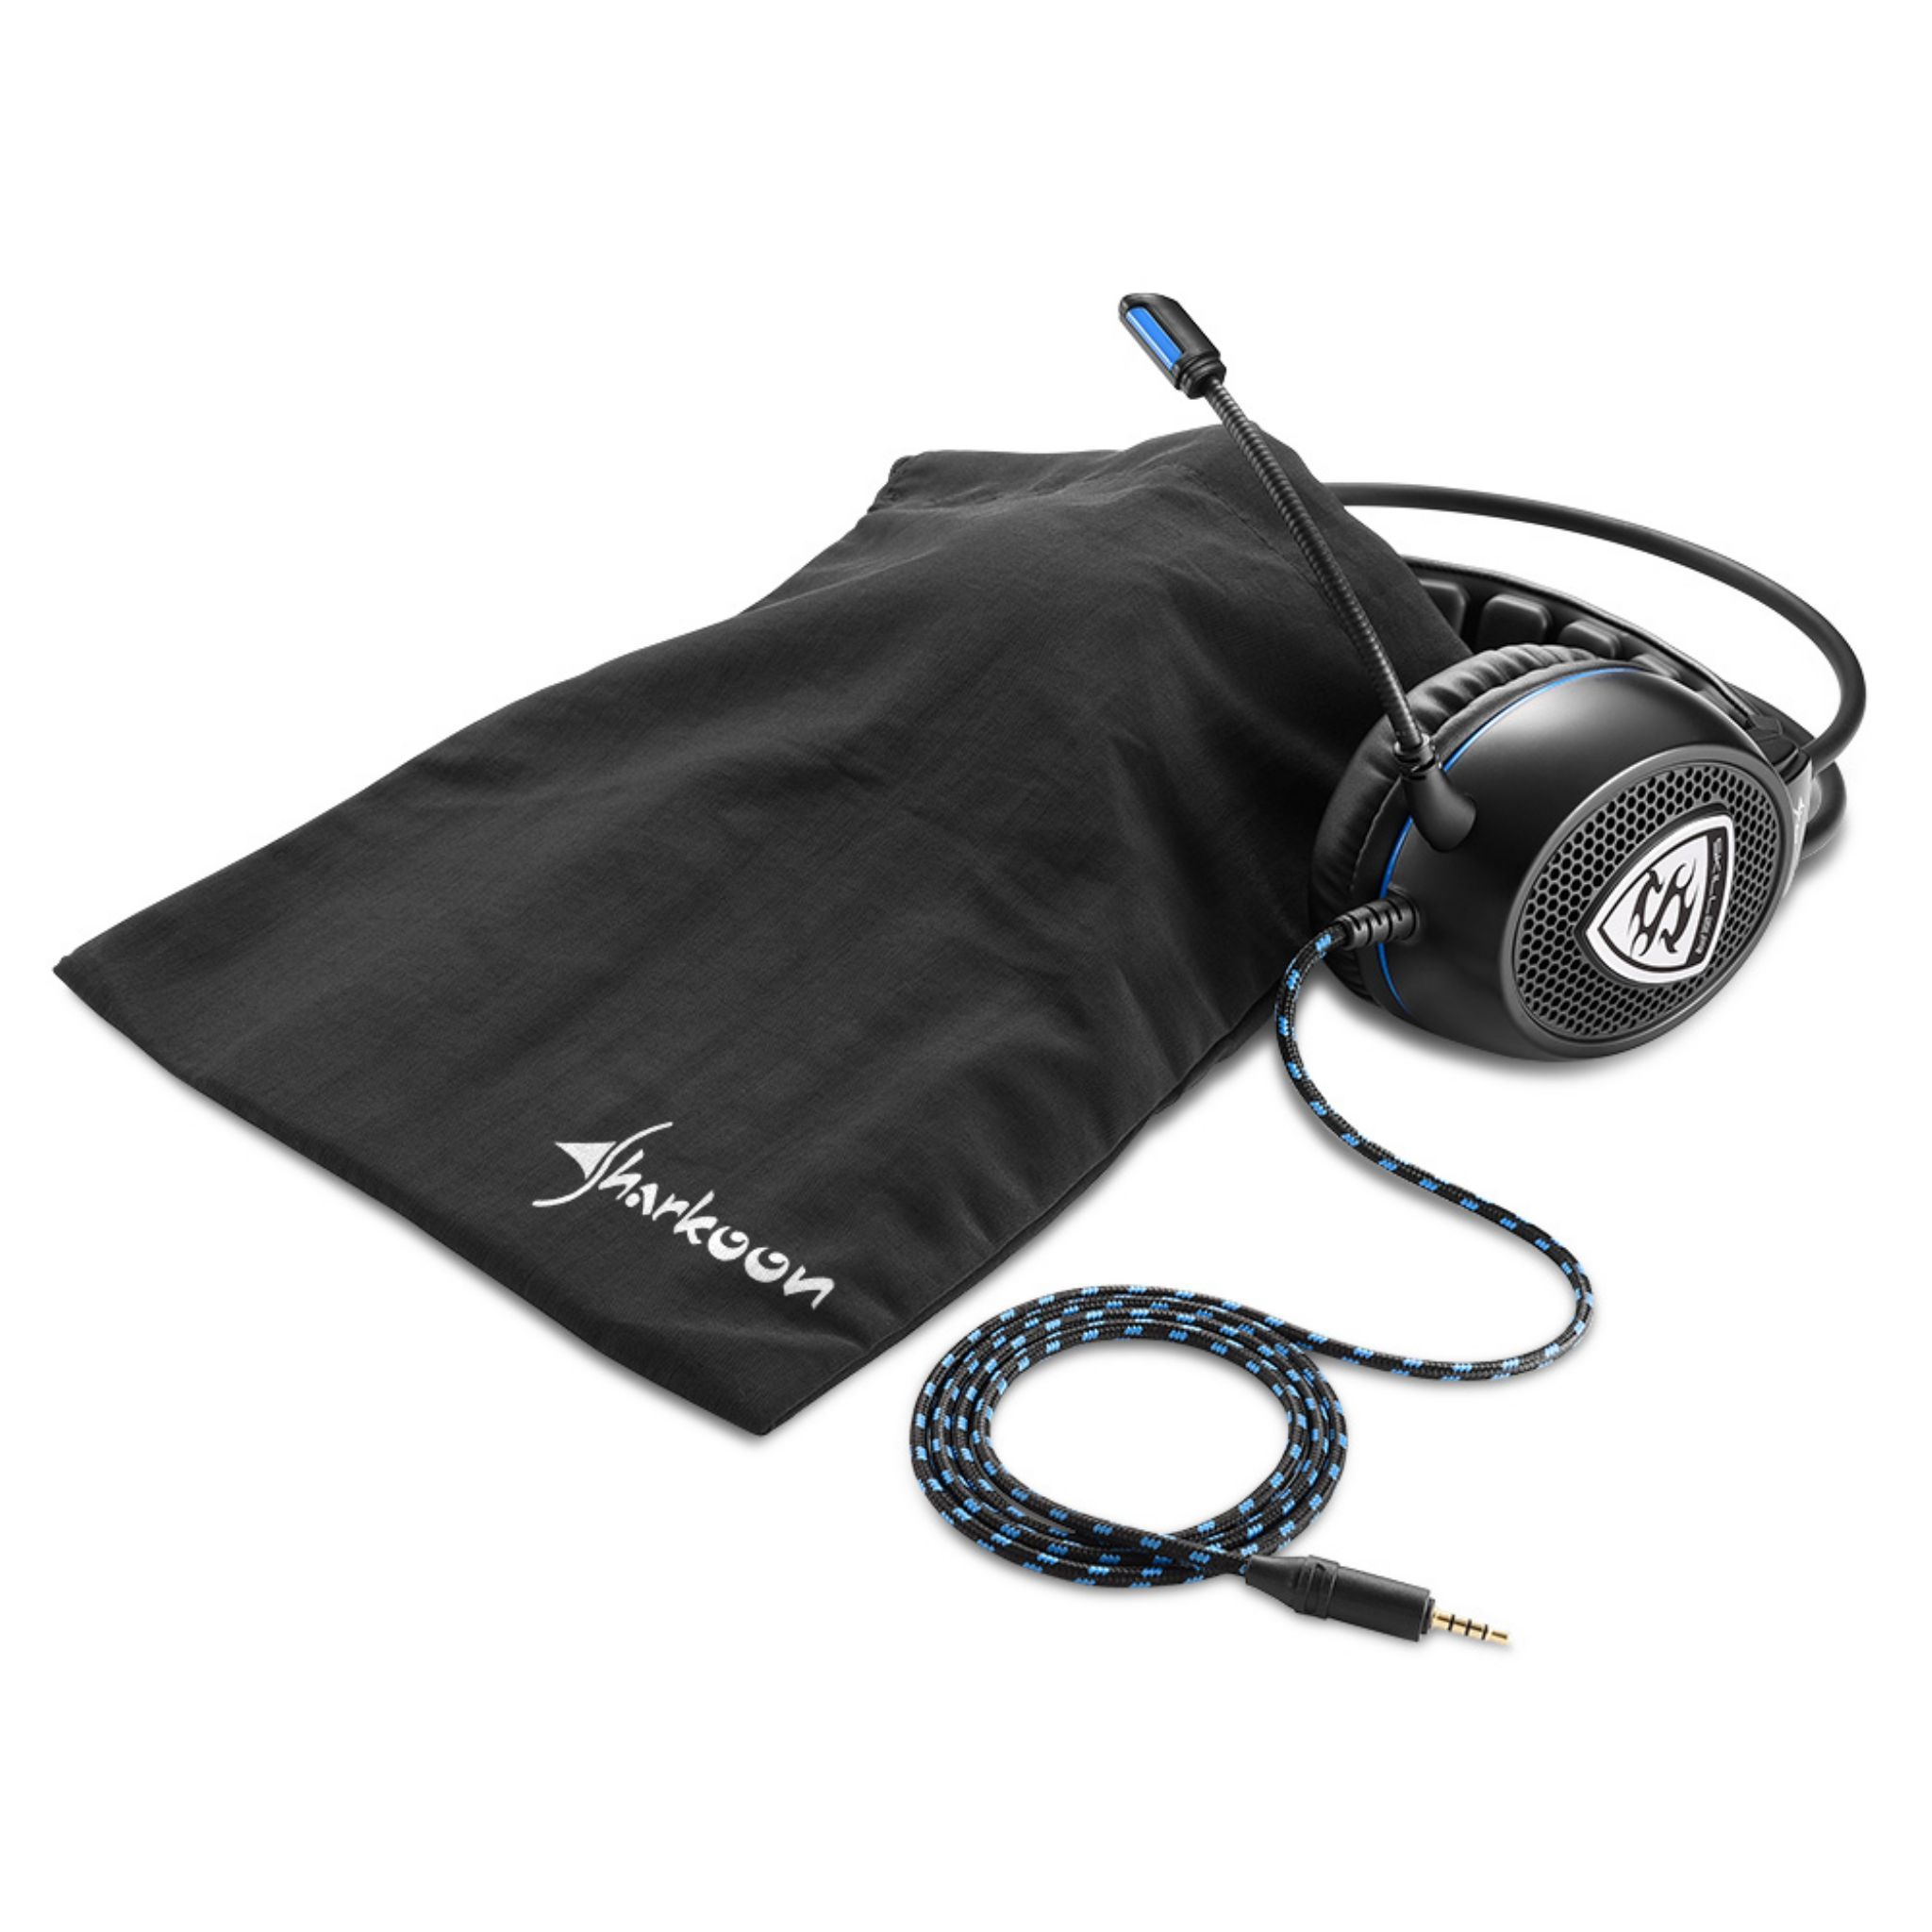 Headset Schwarz SHARKOON Skiller On-ear SGH1,